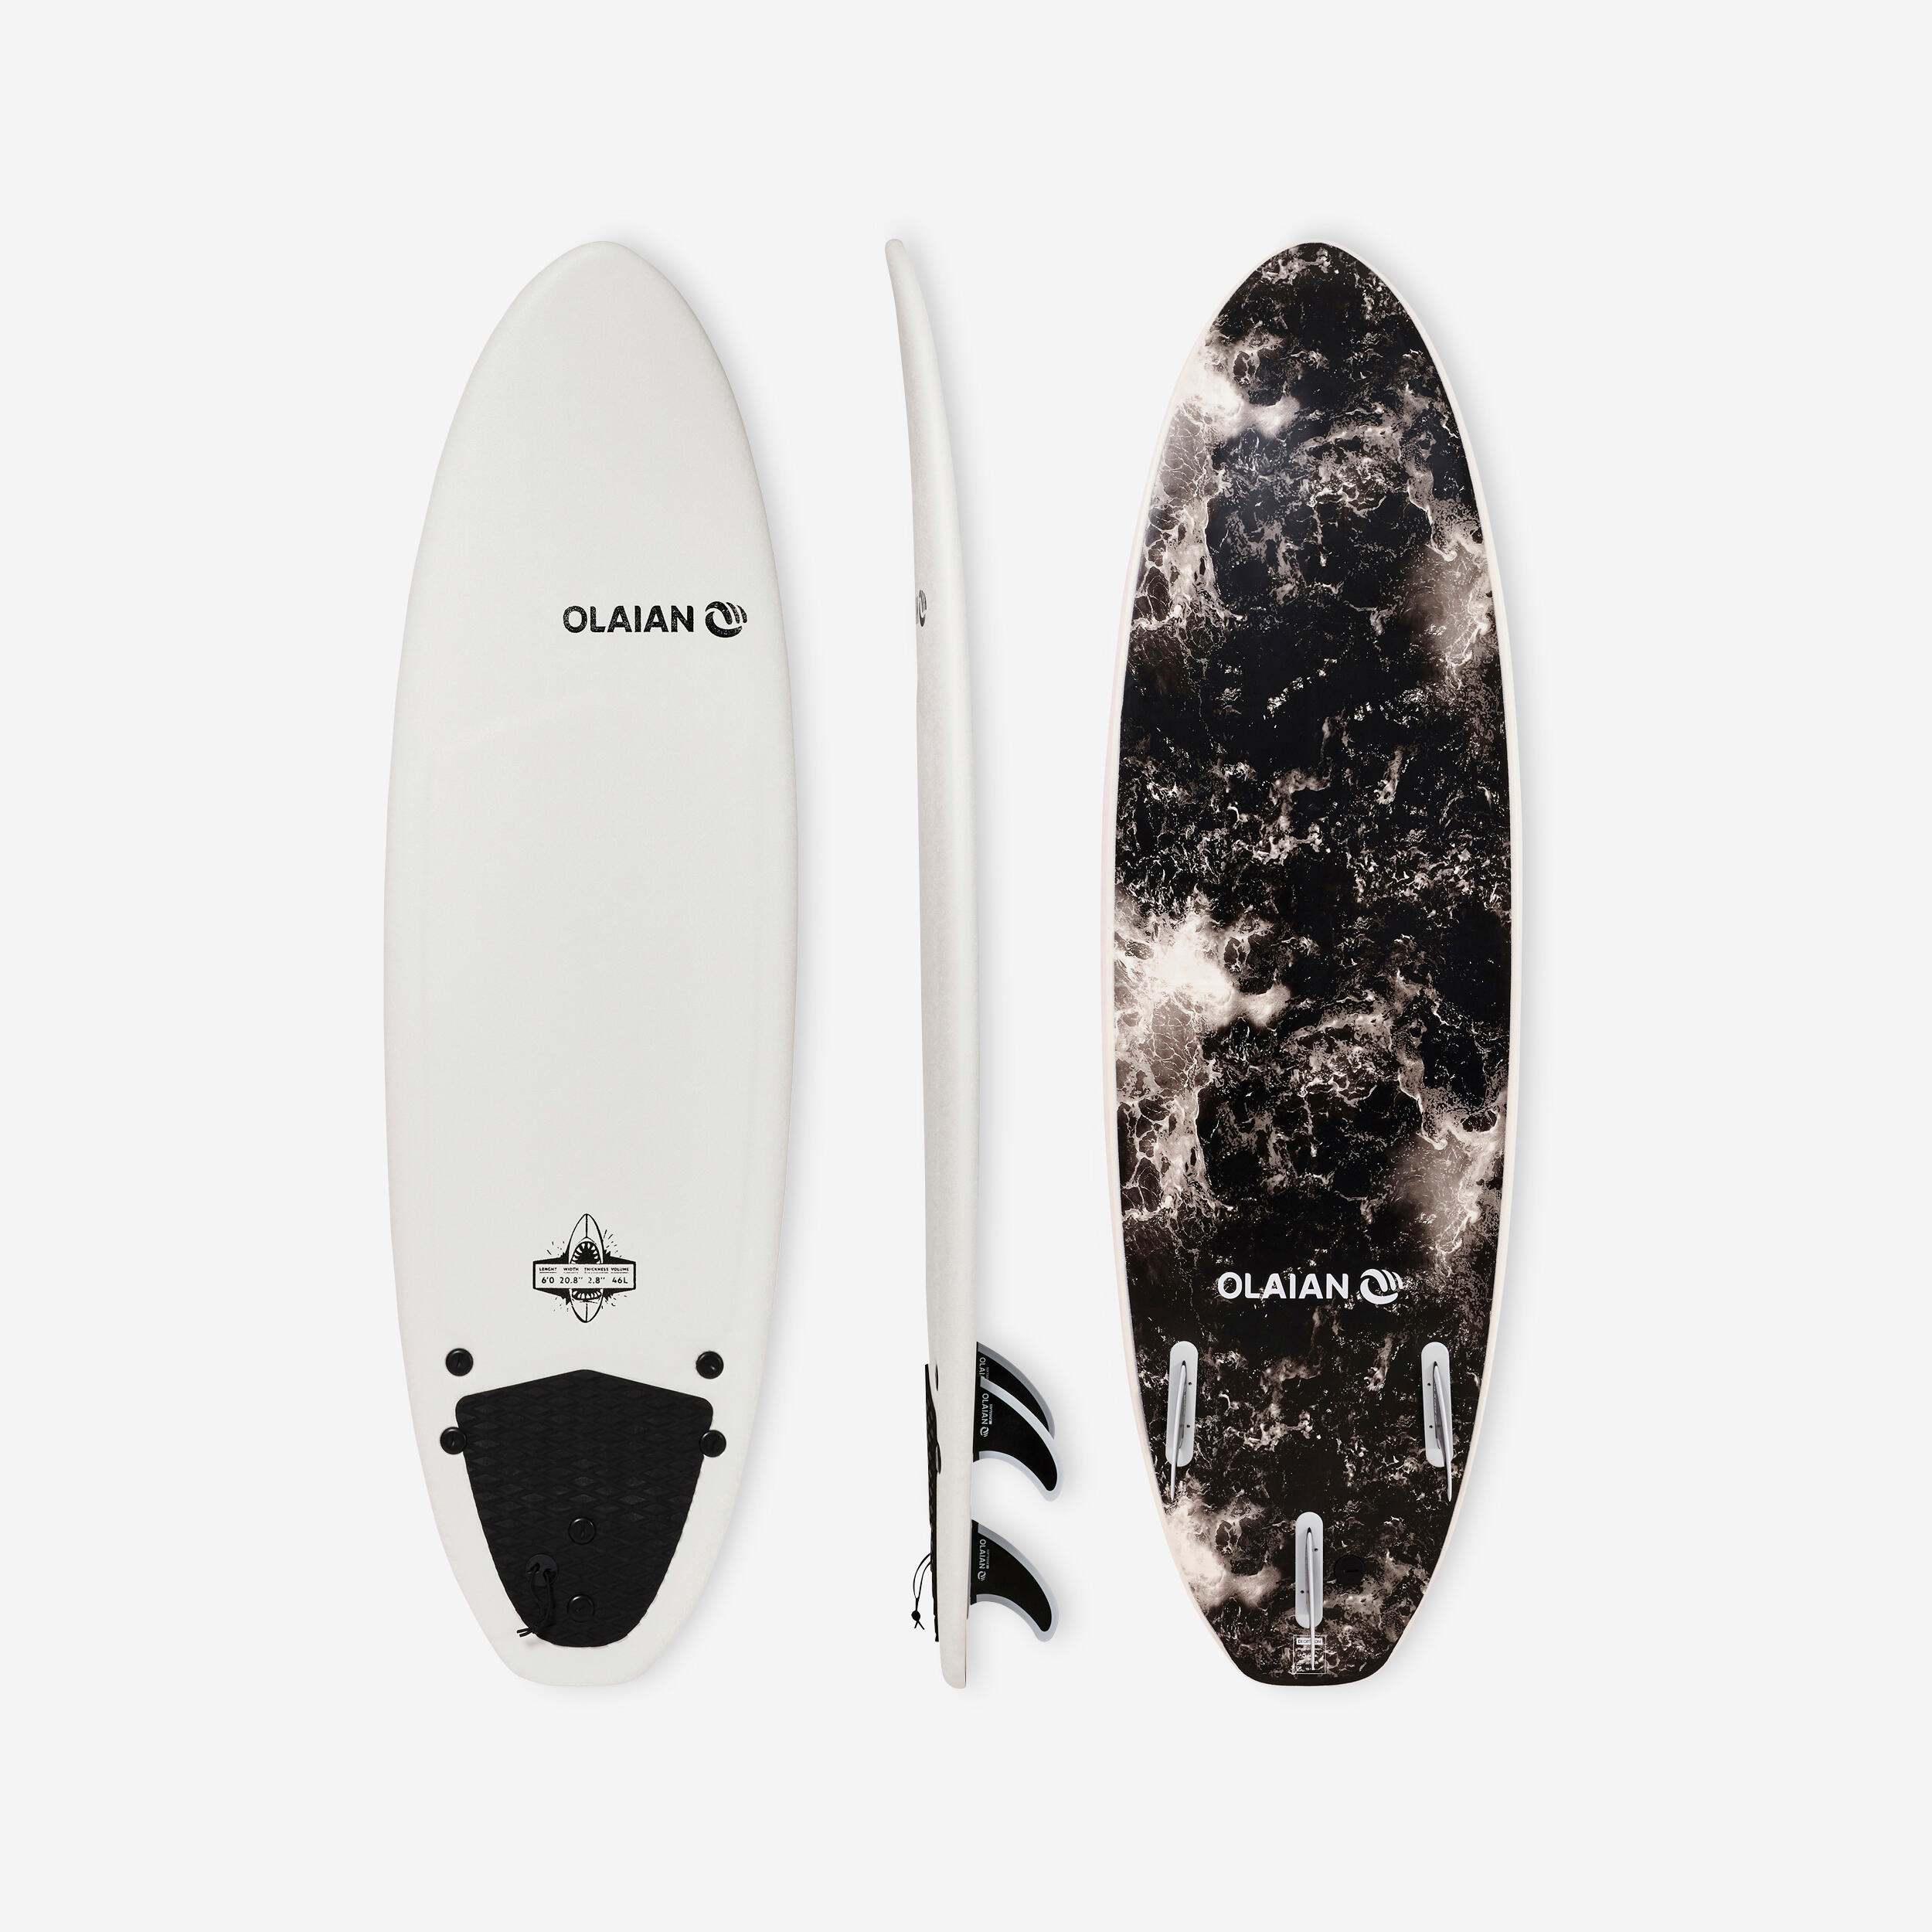 OLAIAN Surfboard Soft 900 6' 46 L EINHEITSGRÖSSE